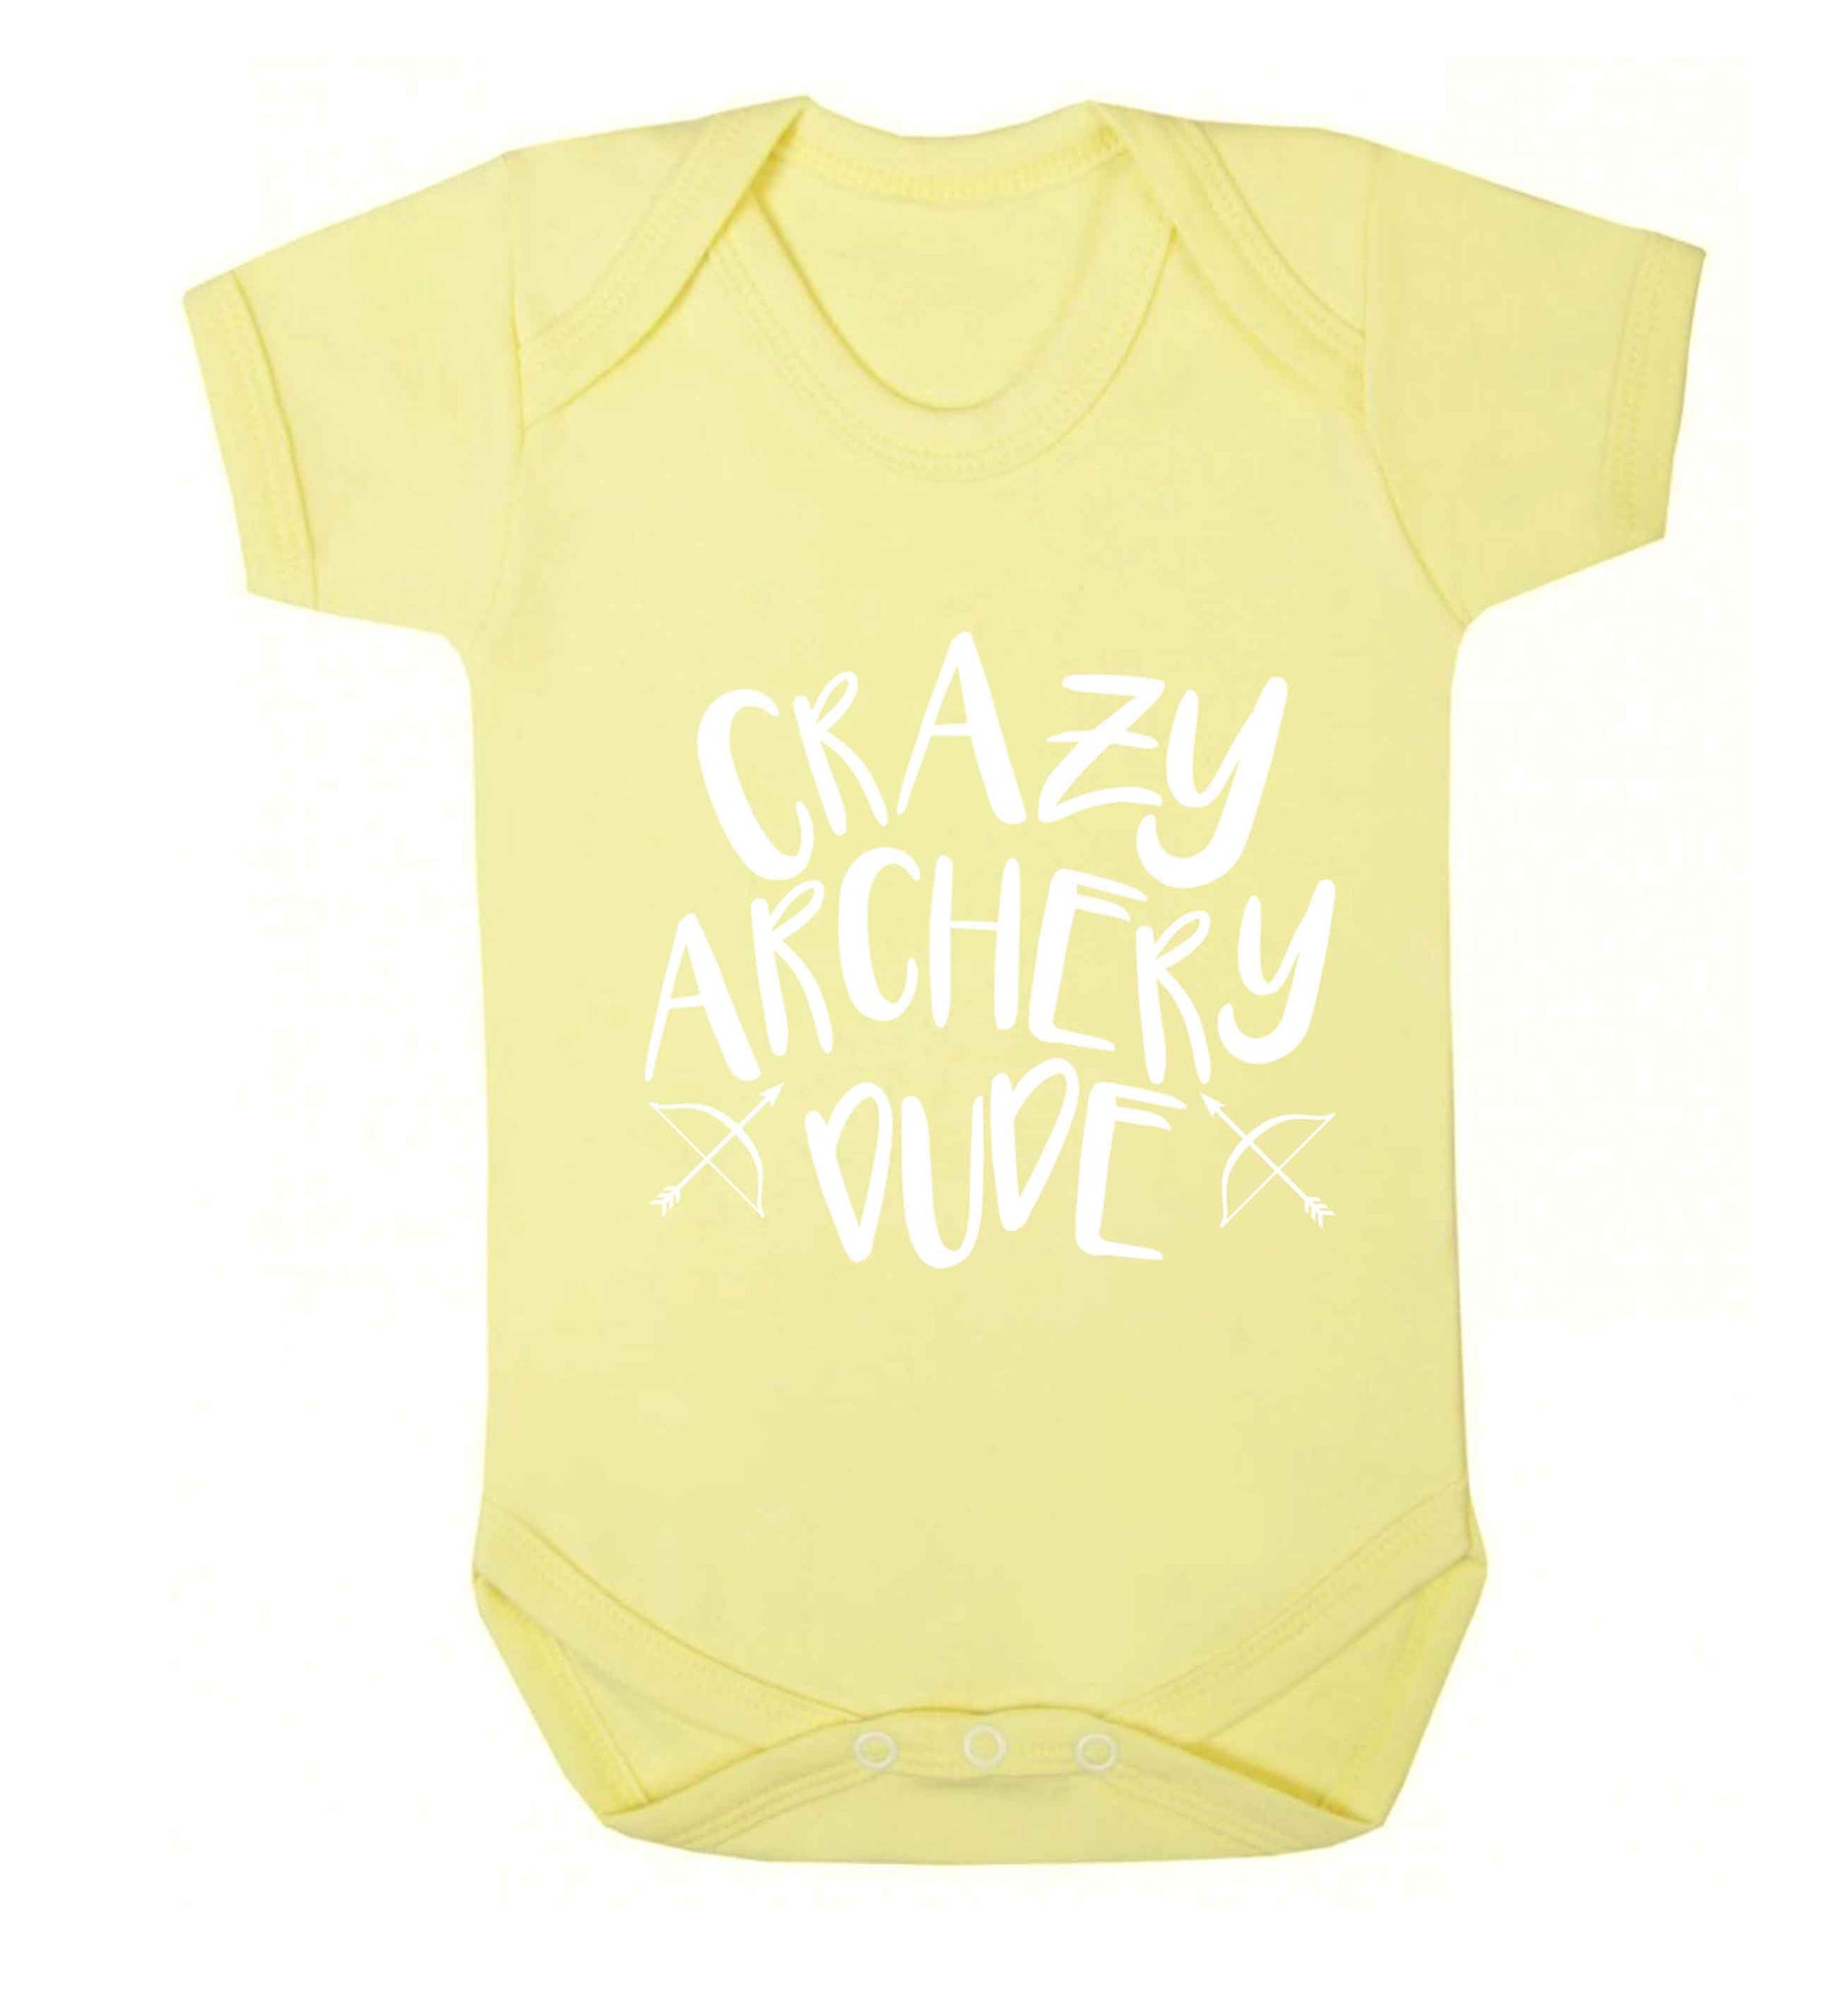 Crazy archery dude Baby Vest pale yellow 18-24 months